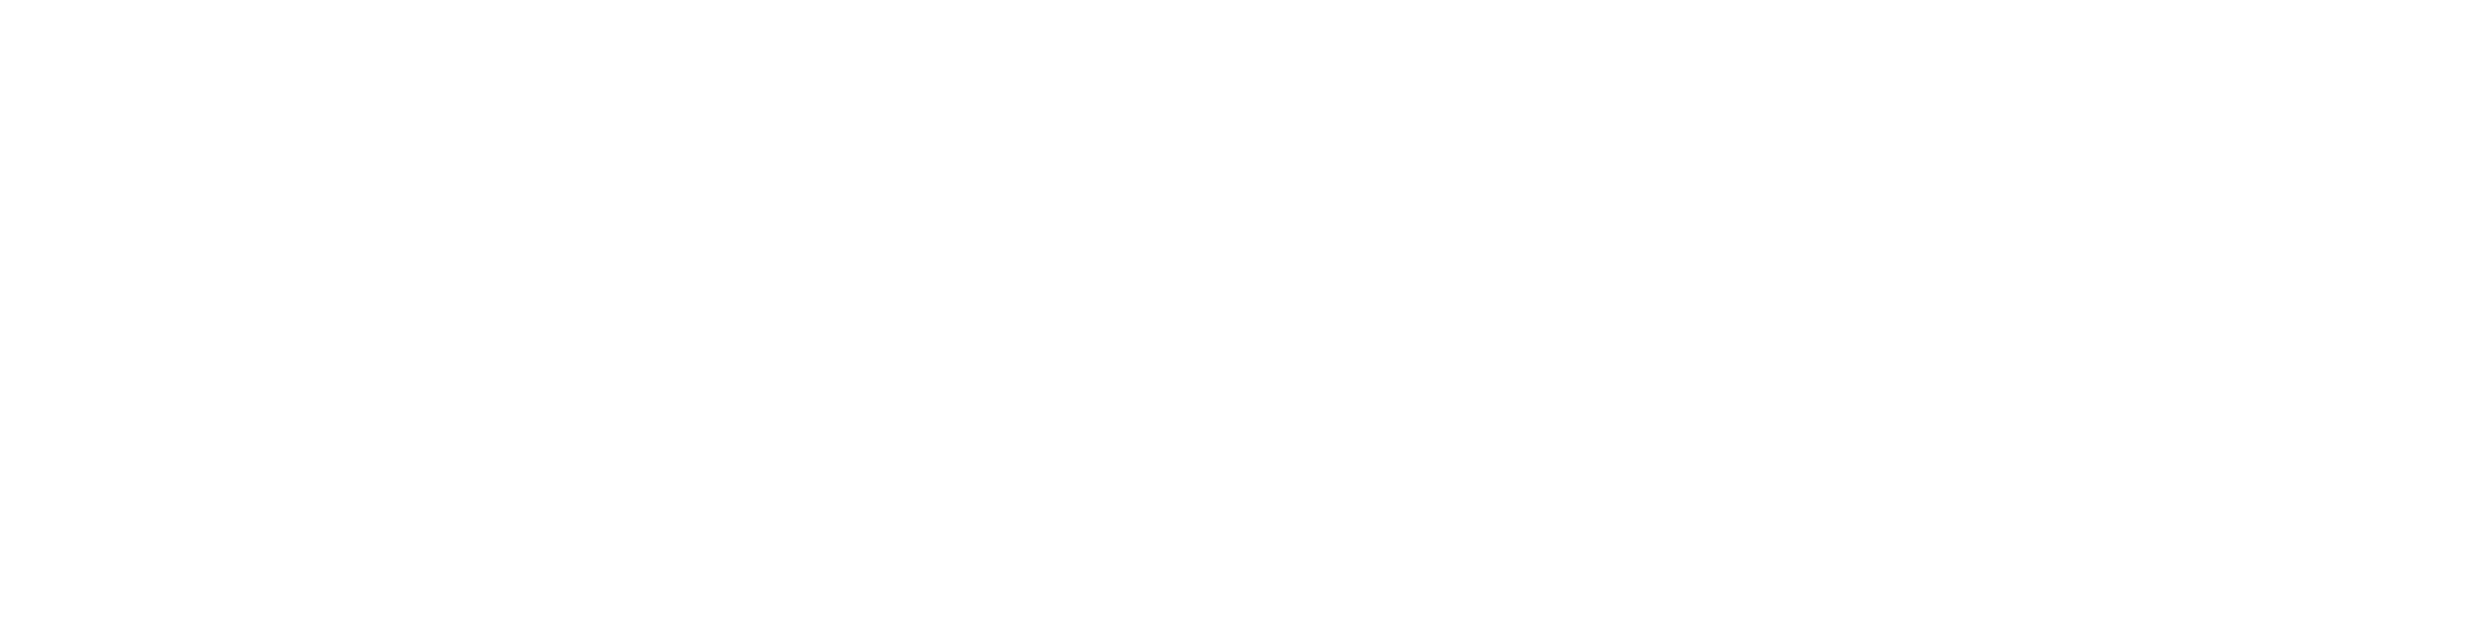 https://www.columbiasportswearcompany.com/static/media/csc-logo-white.d738029fcbb832c95a20.png